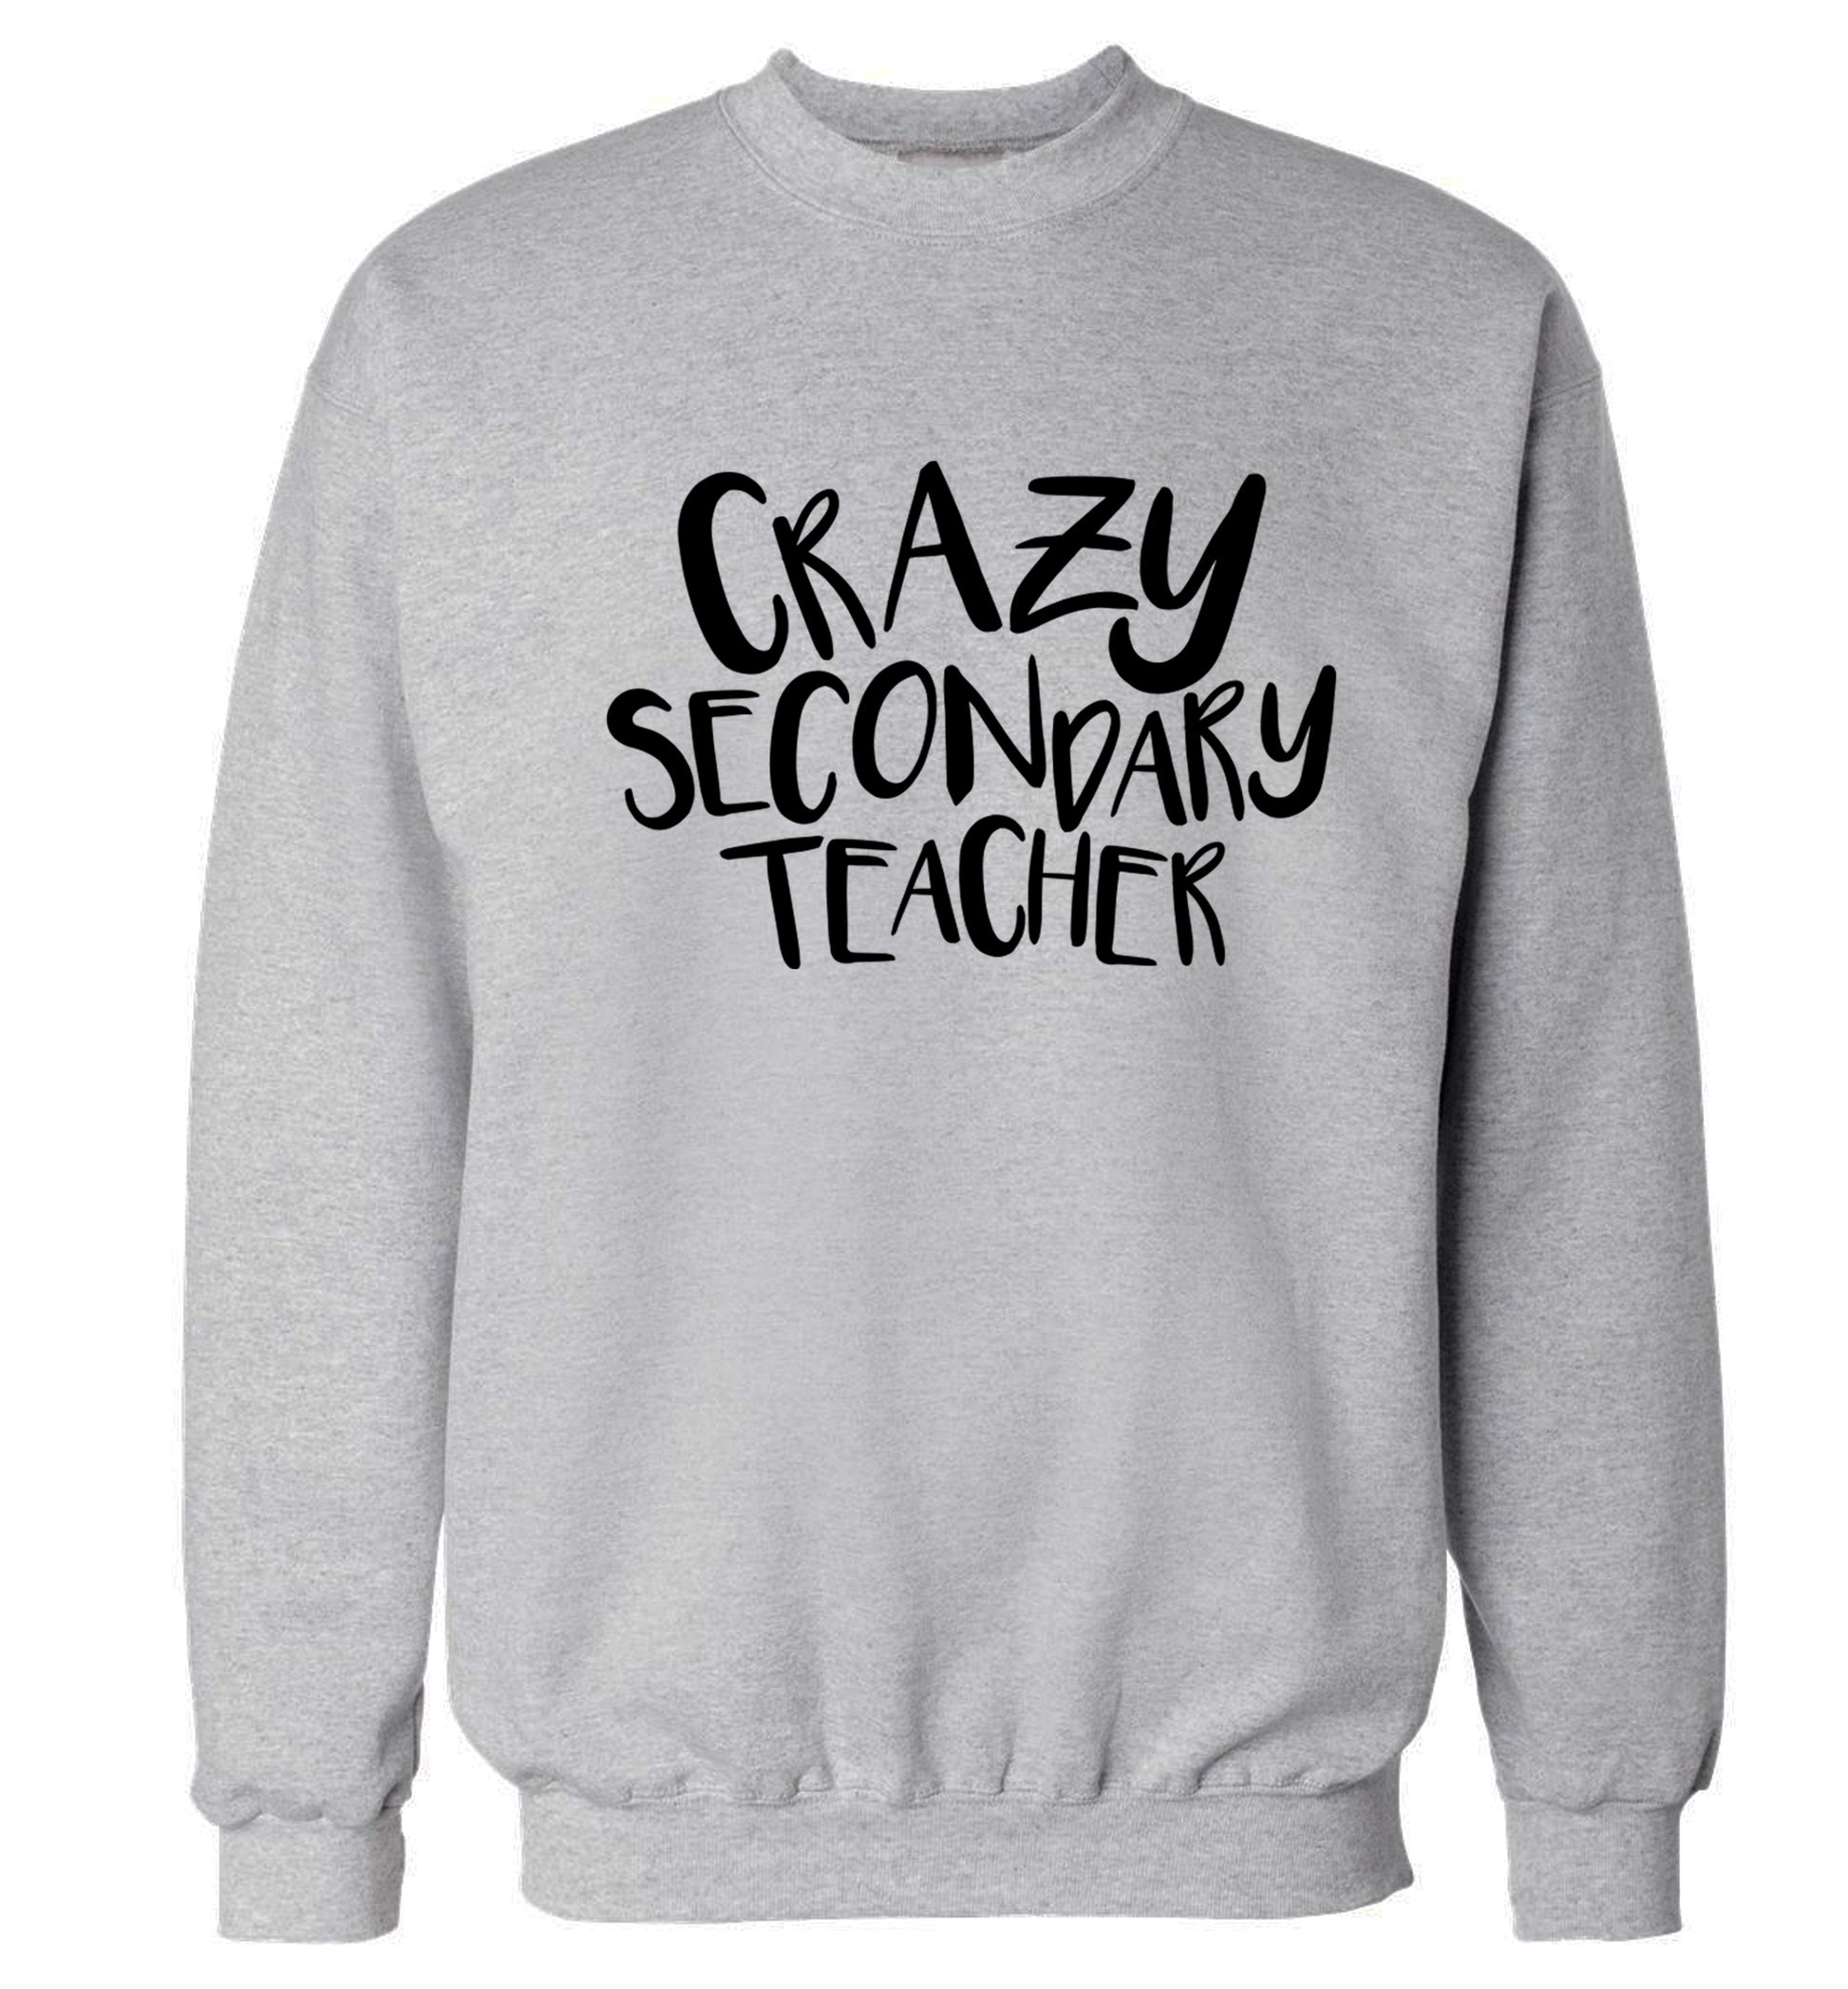 Crazy secondary teacher Adult's unisex grey Sweater 2XL